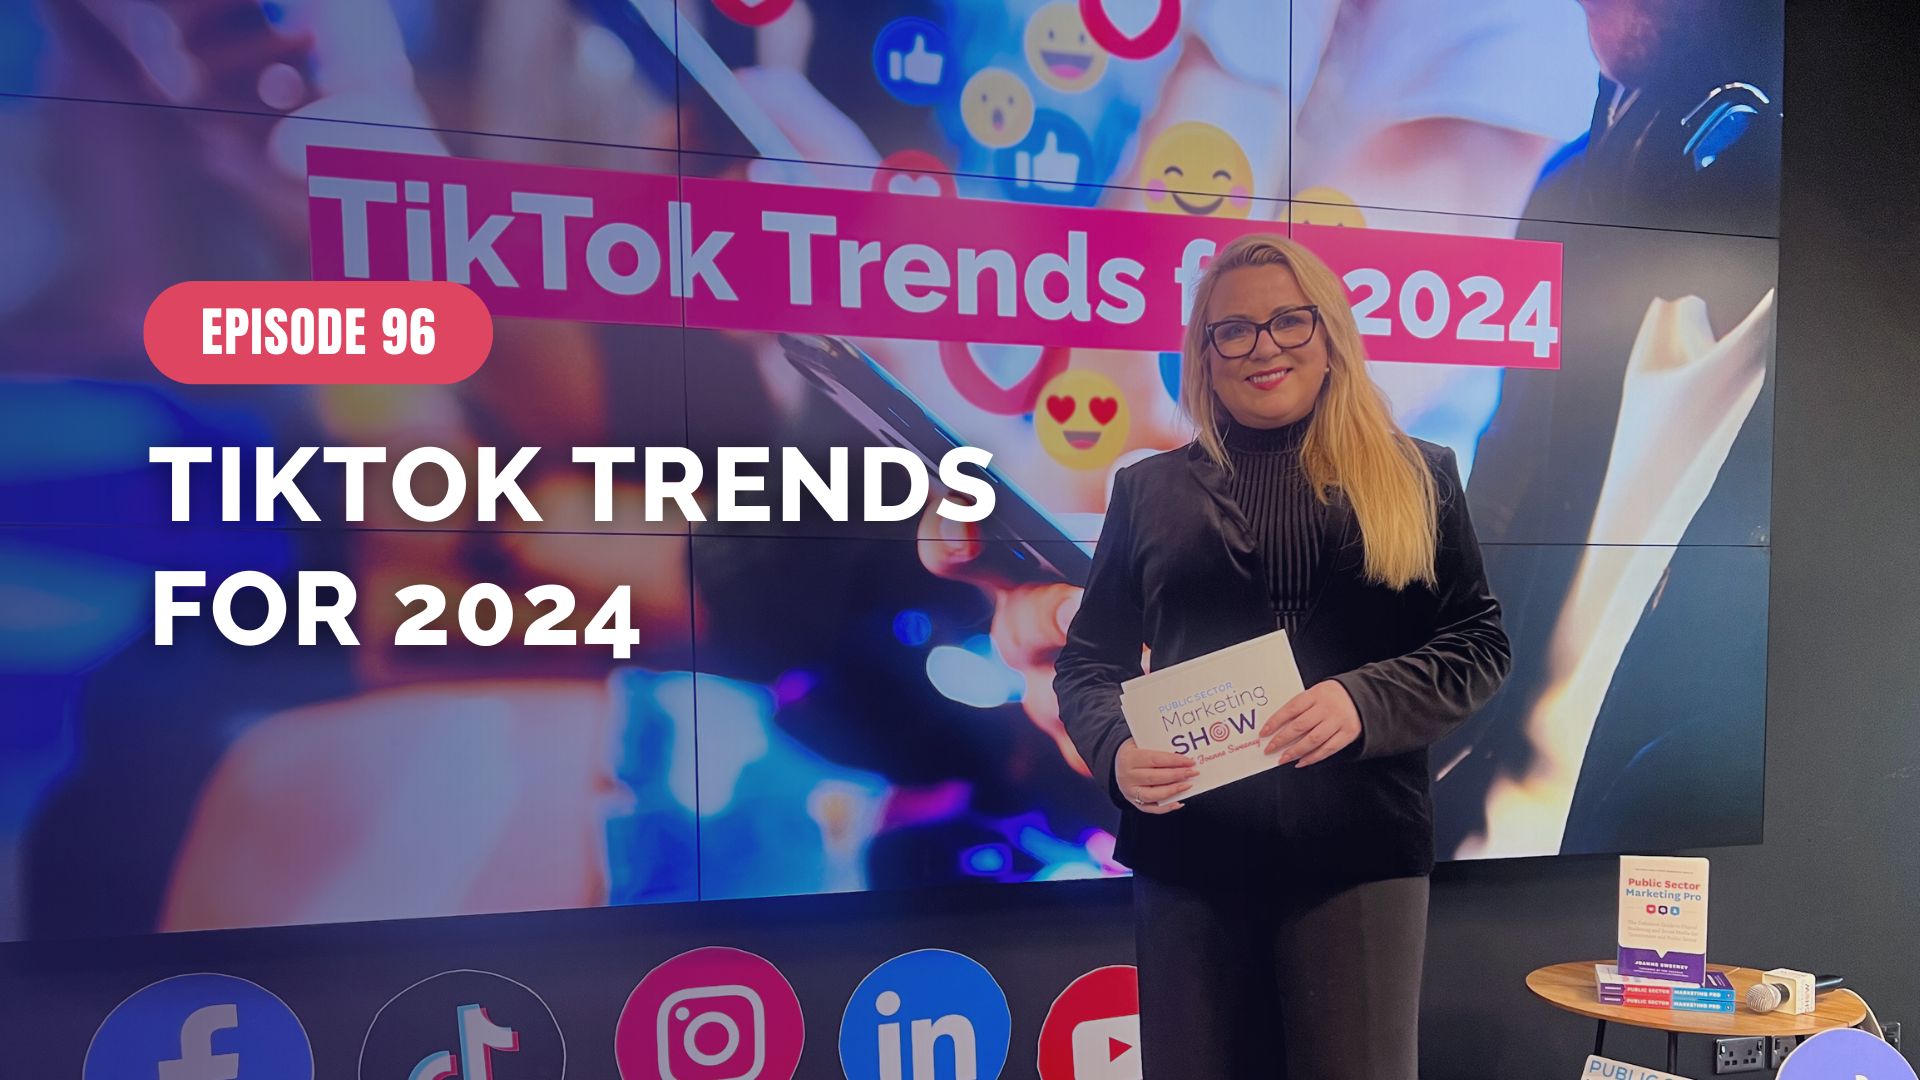 TikTok Trends for 2024